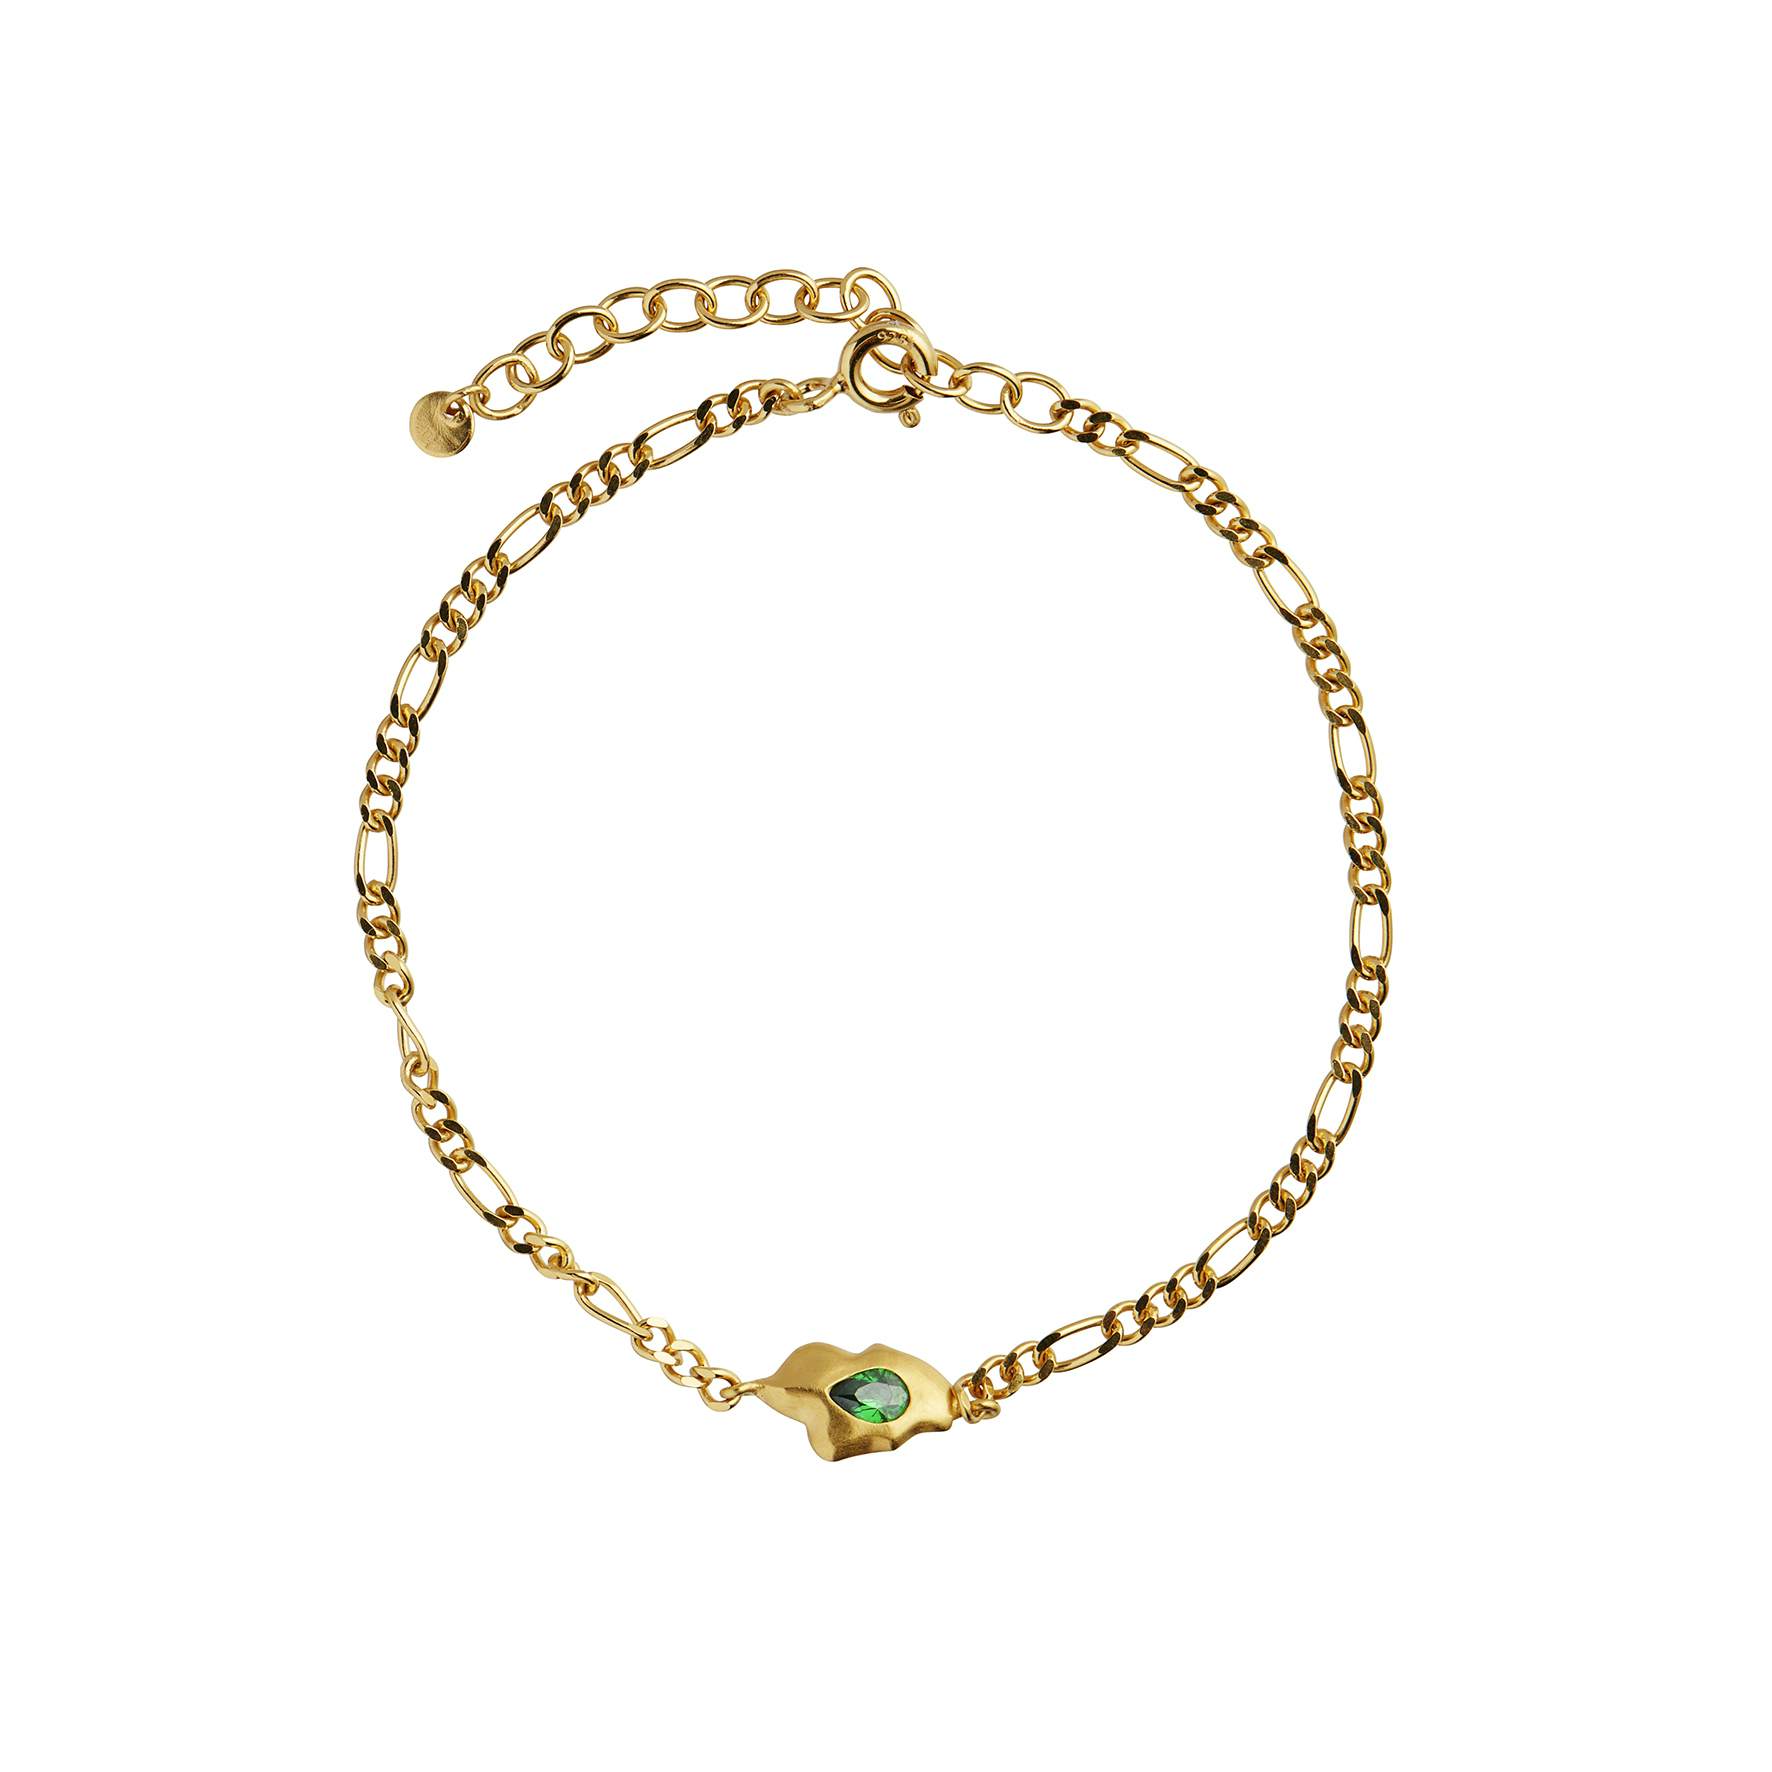 Glimpse Figaro Bracelet With Green Stone fra STINE A Jewelry i Forgyldt-Sølv Sterling 925